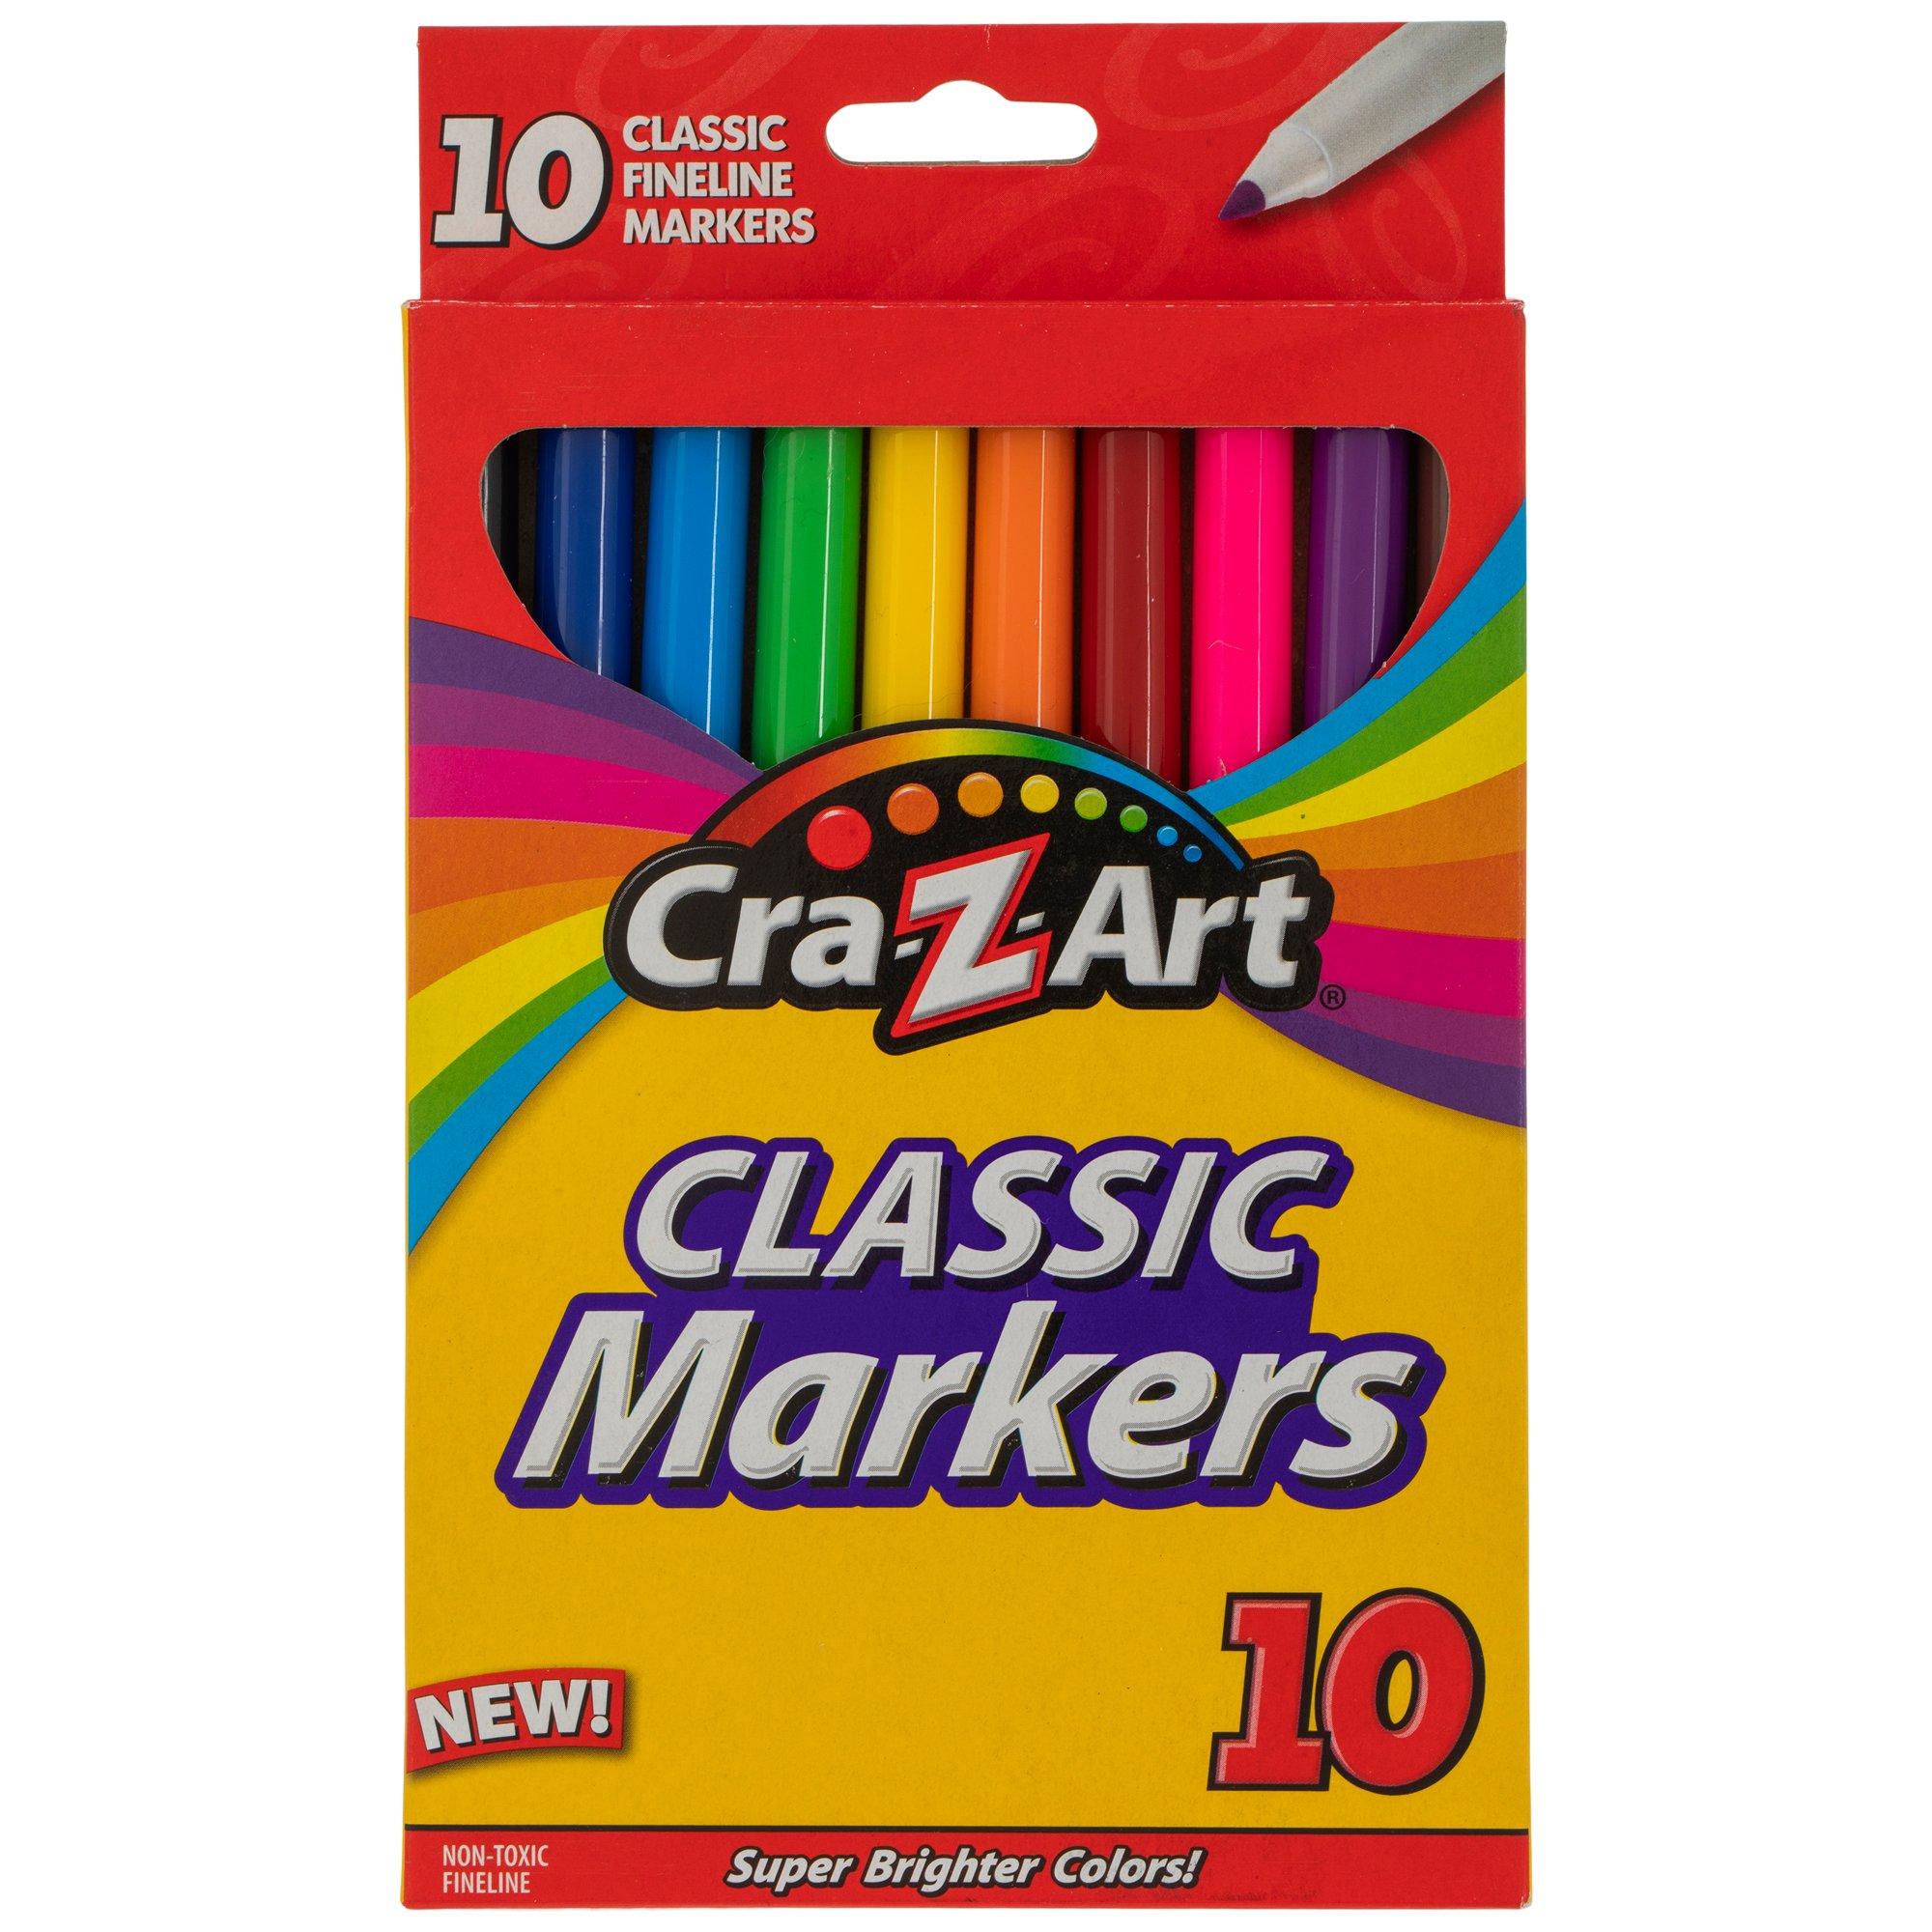 Crayola Classic Broad Line Markers - 10 Piece Set, Hobby Lobby